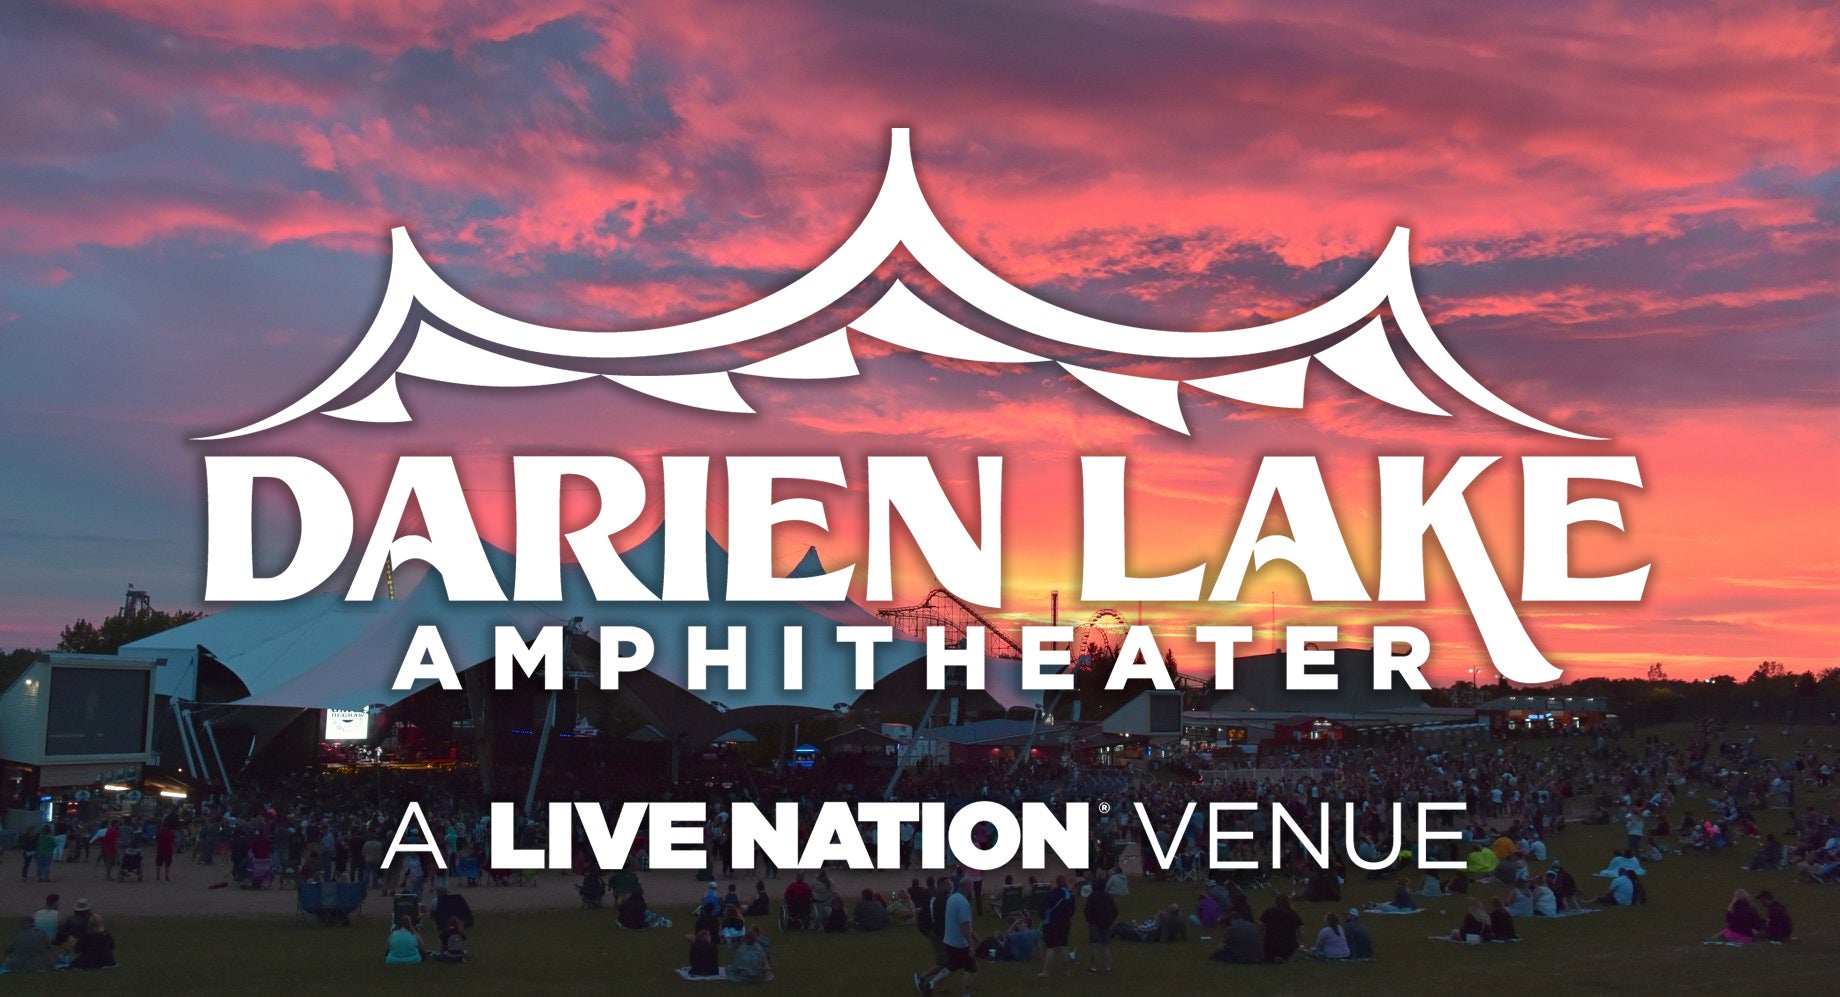 darien lake calendar 2021 Darien Lake Amphitheater 2020 Show Schedule Venue Information Live Nation darien lake calendar 2021